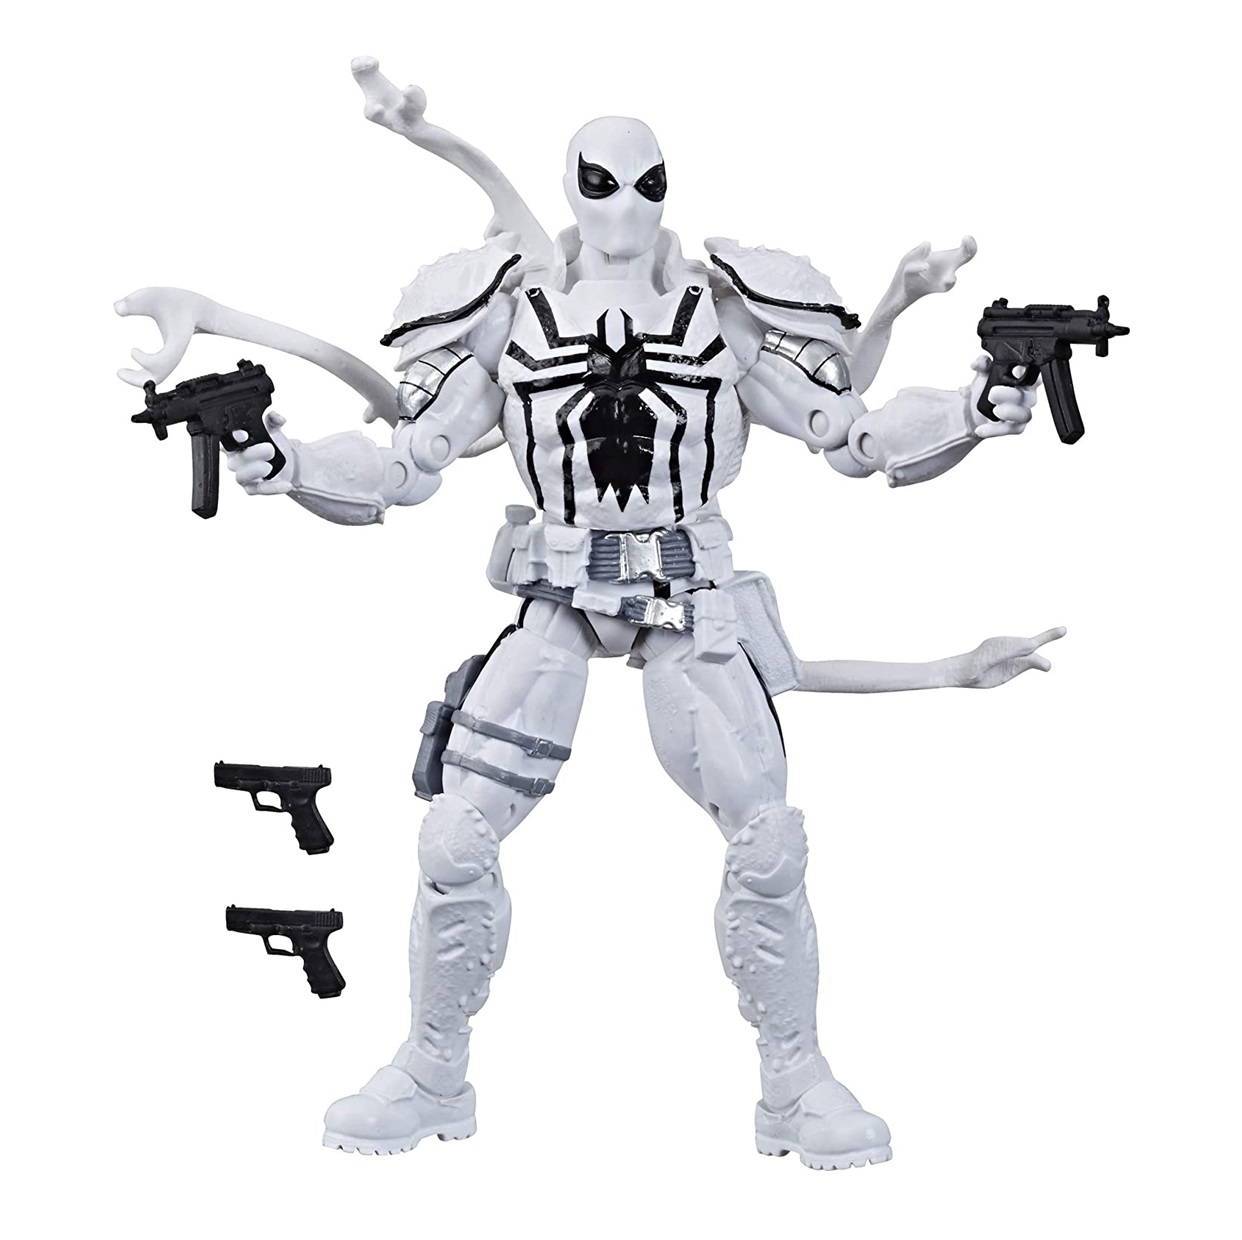 Agent Anti Venom Figura Marvel Venom 80th Years Legends